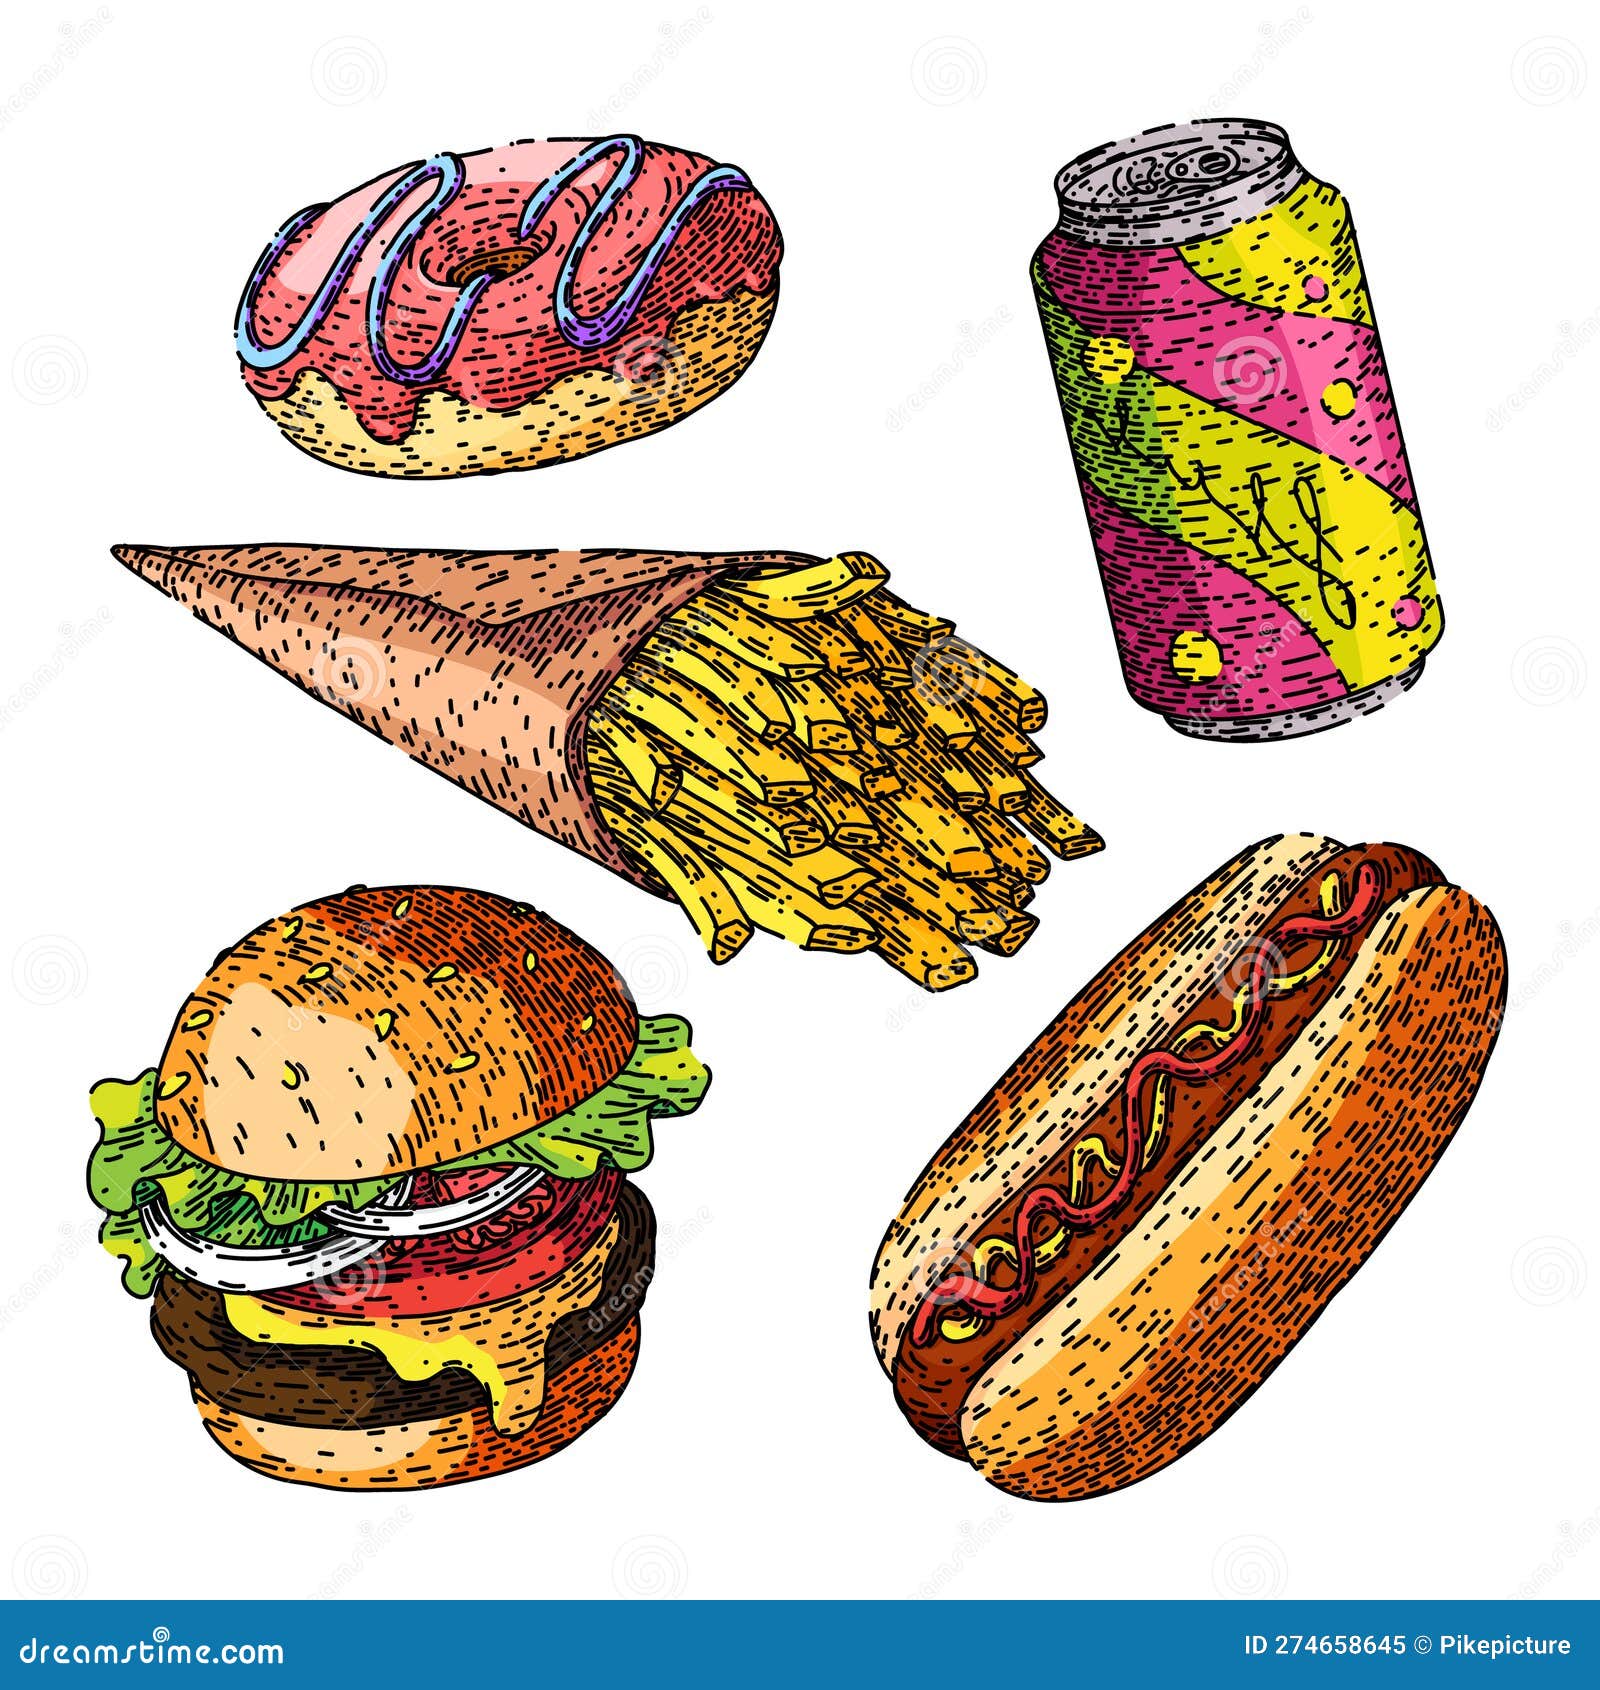 fast food drawing | food drawing | drawing food | how to draw food | junk  food drawing | Easy drawings, Drawings, Food drawing